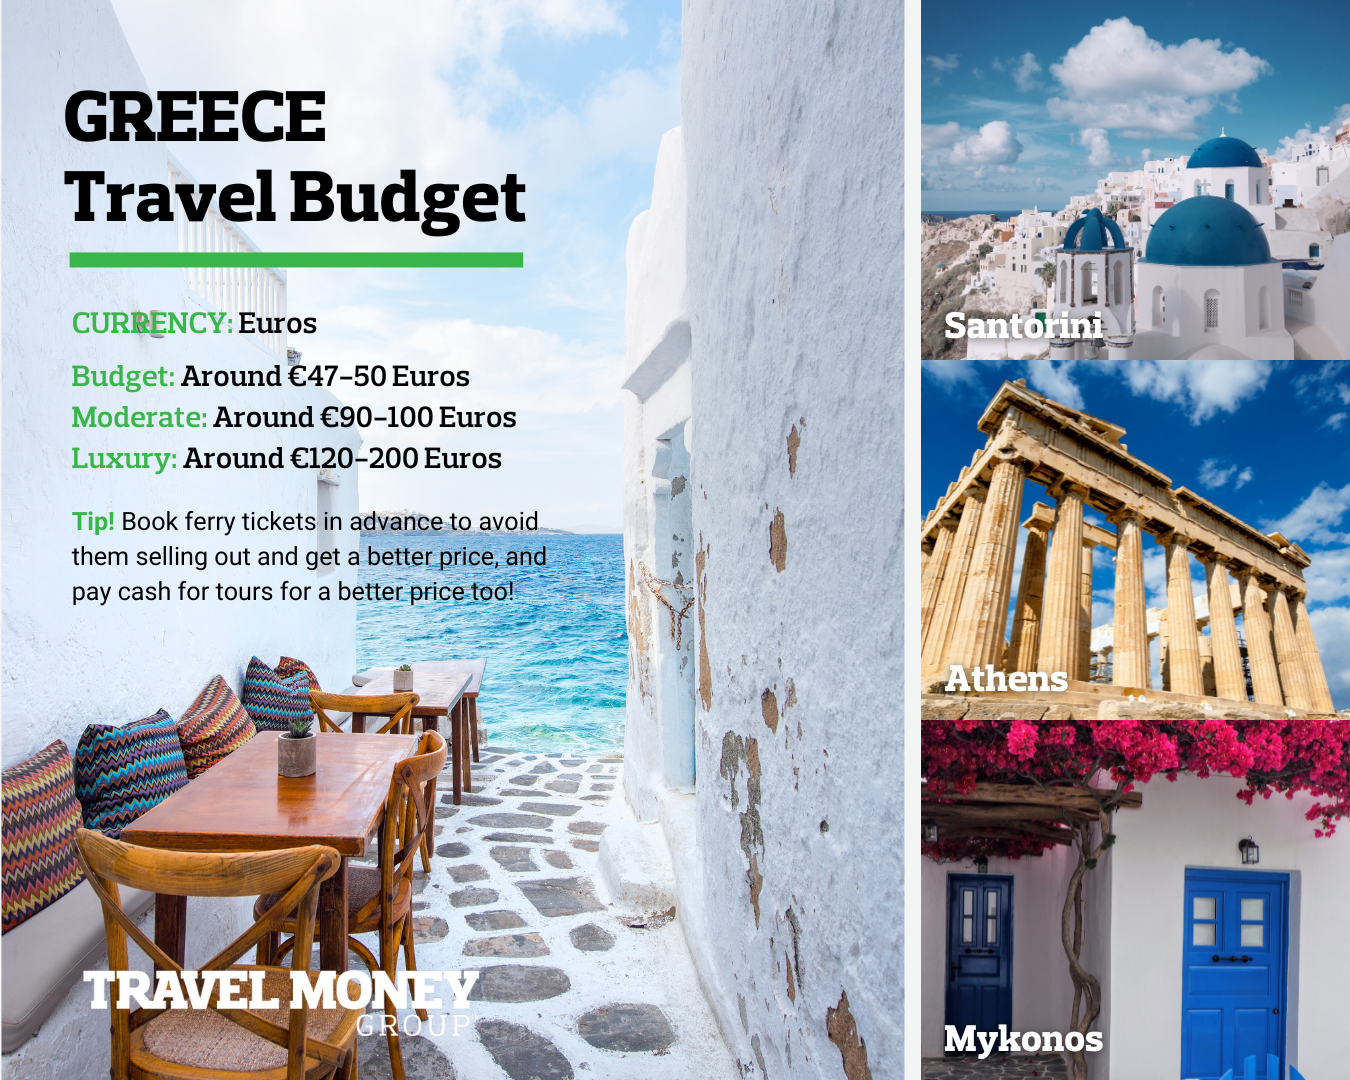 Greece Travel Budget Infographic